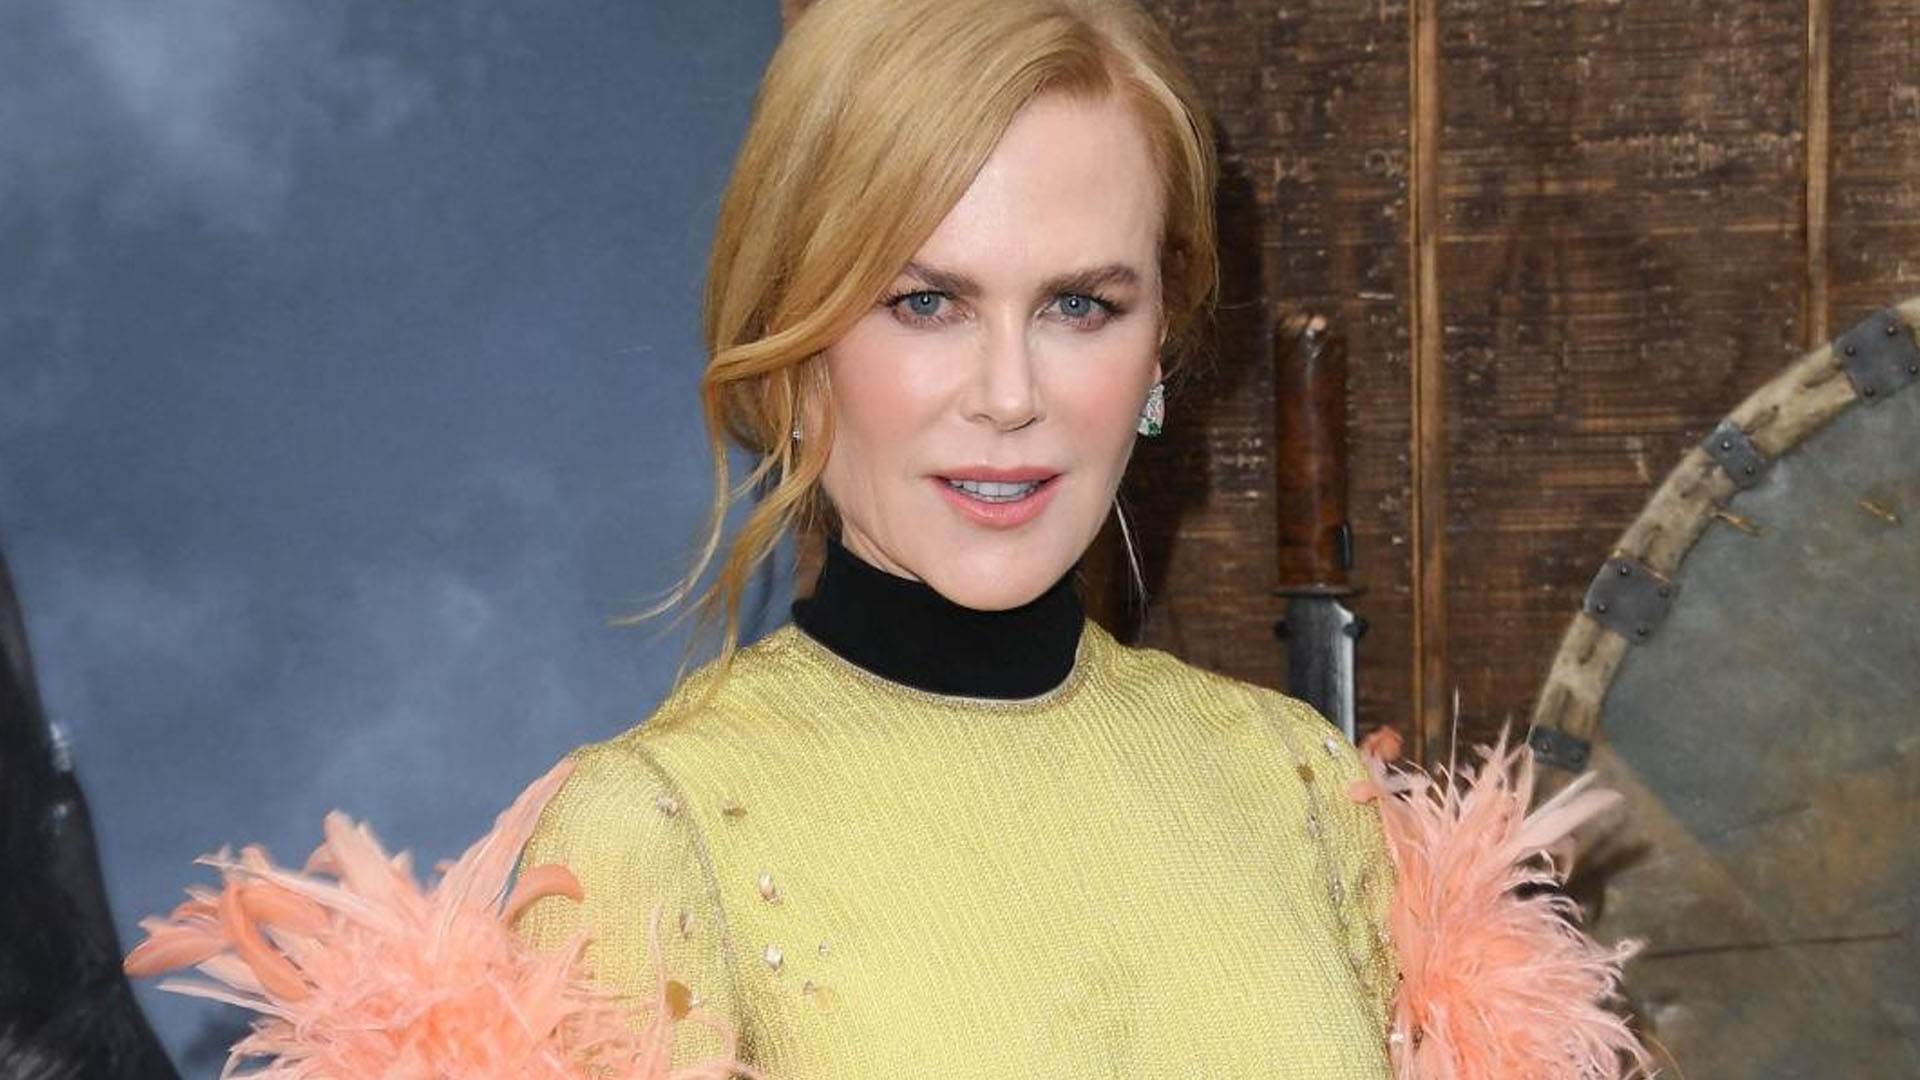 Nicole Kidman to Begin Filming on Cape Cod Next Week.